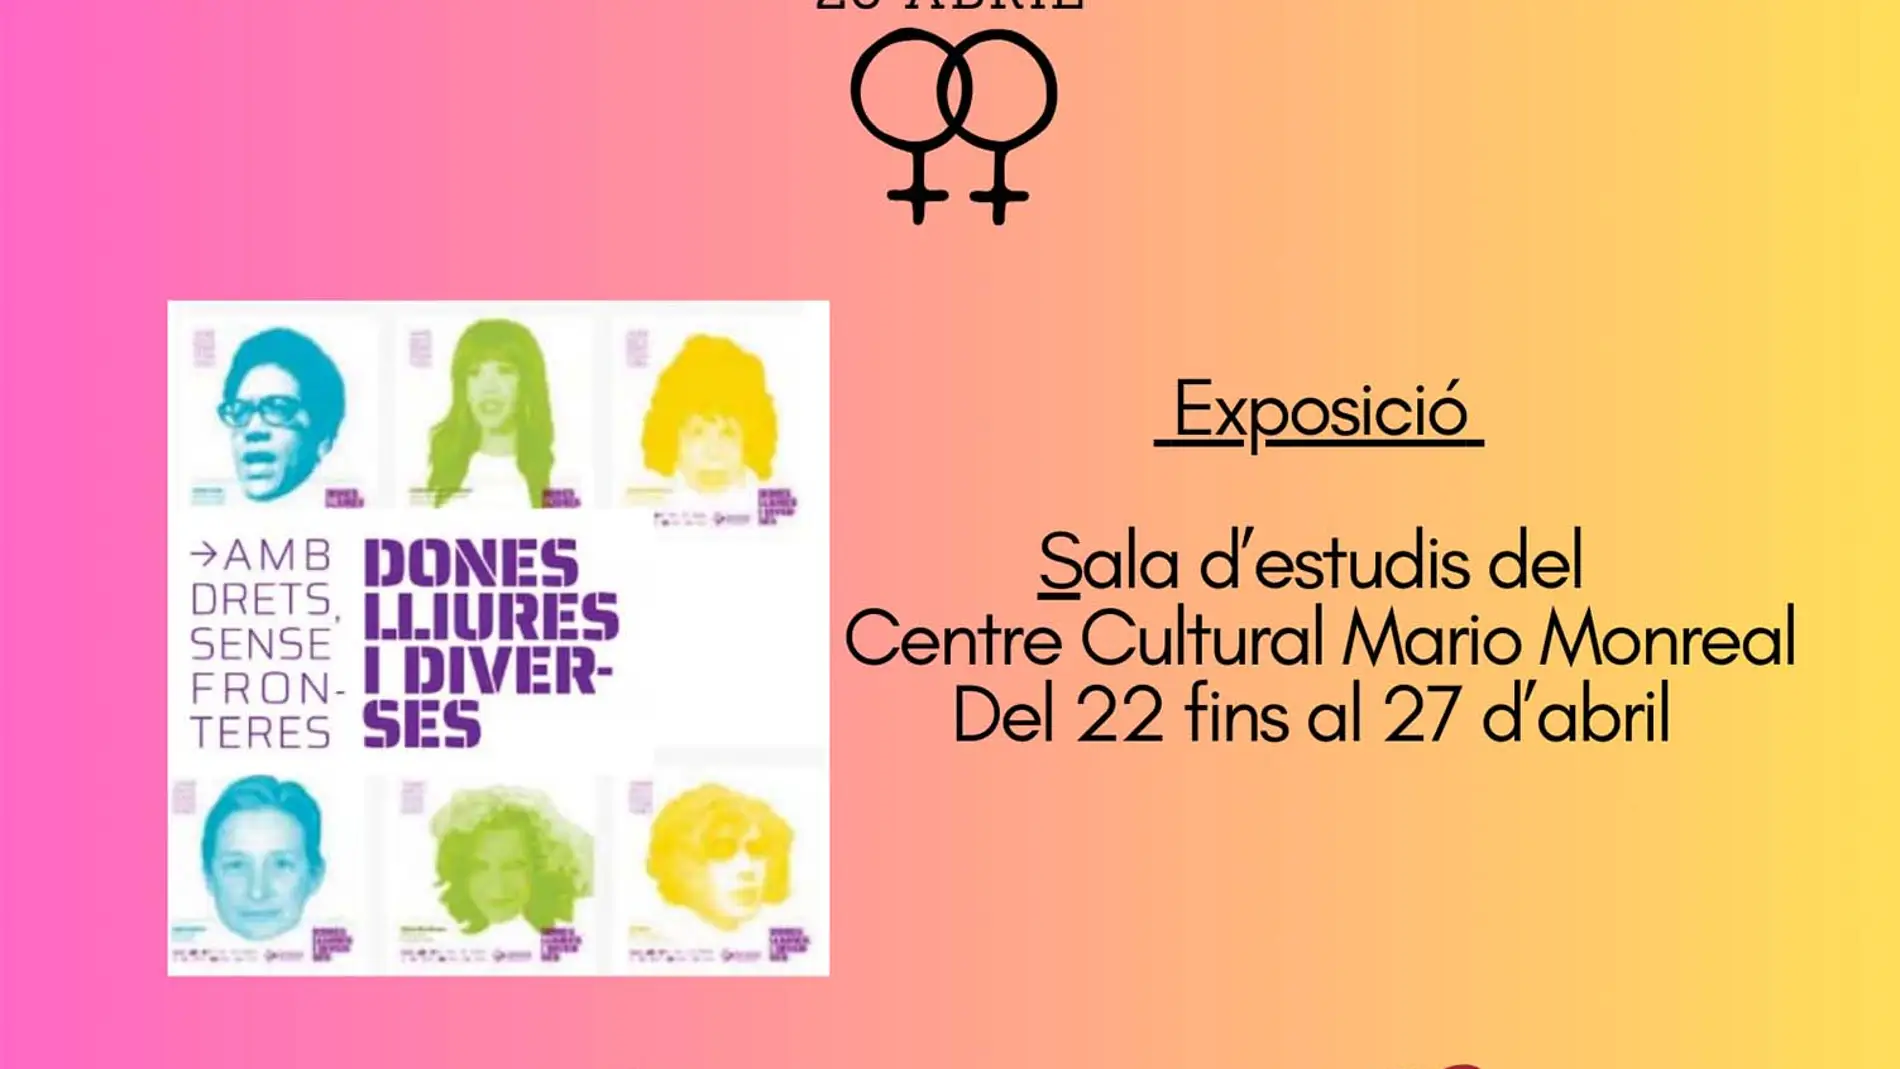 Presentación de la exposición : “Dones lliures i diverses sense fronteres”